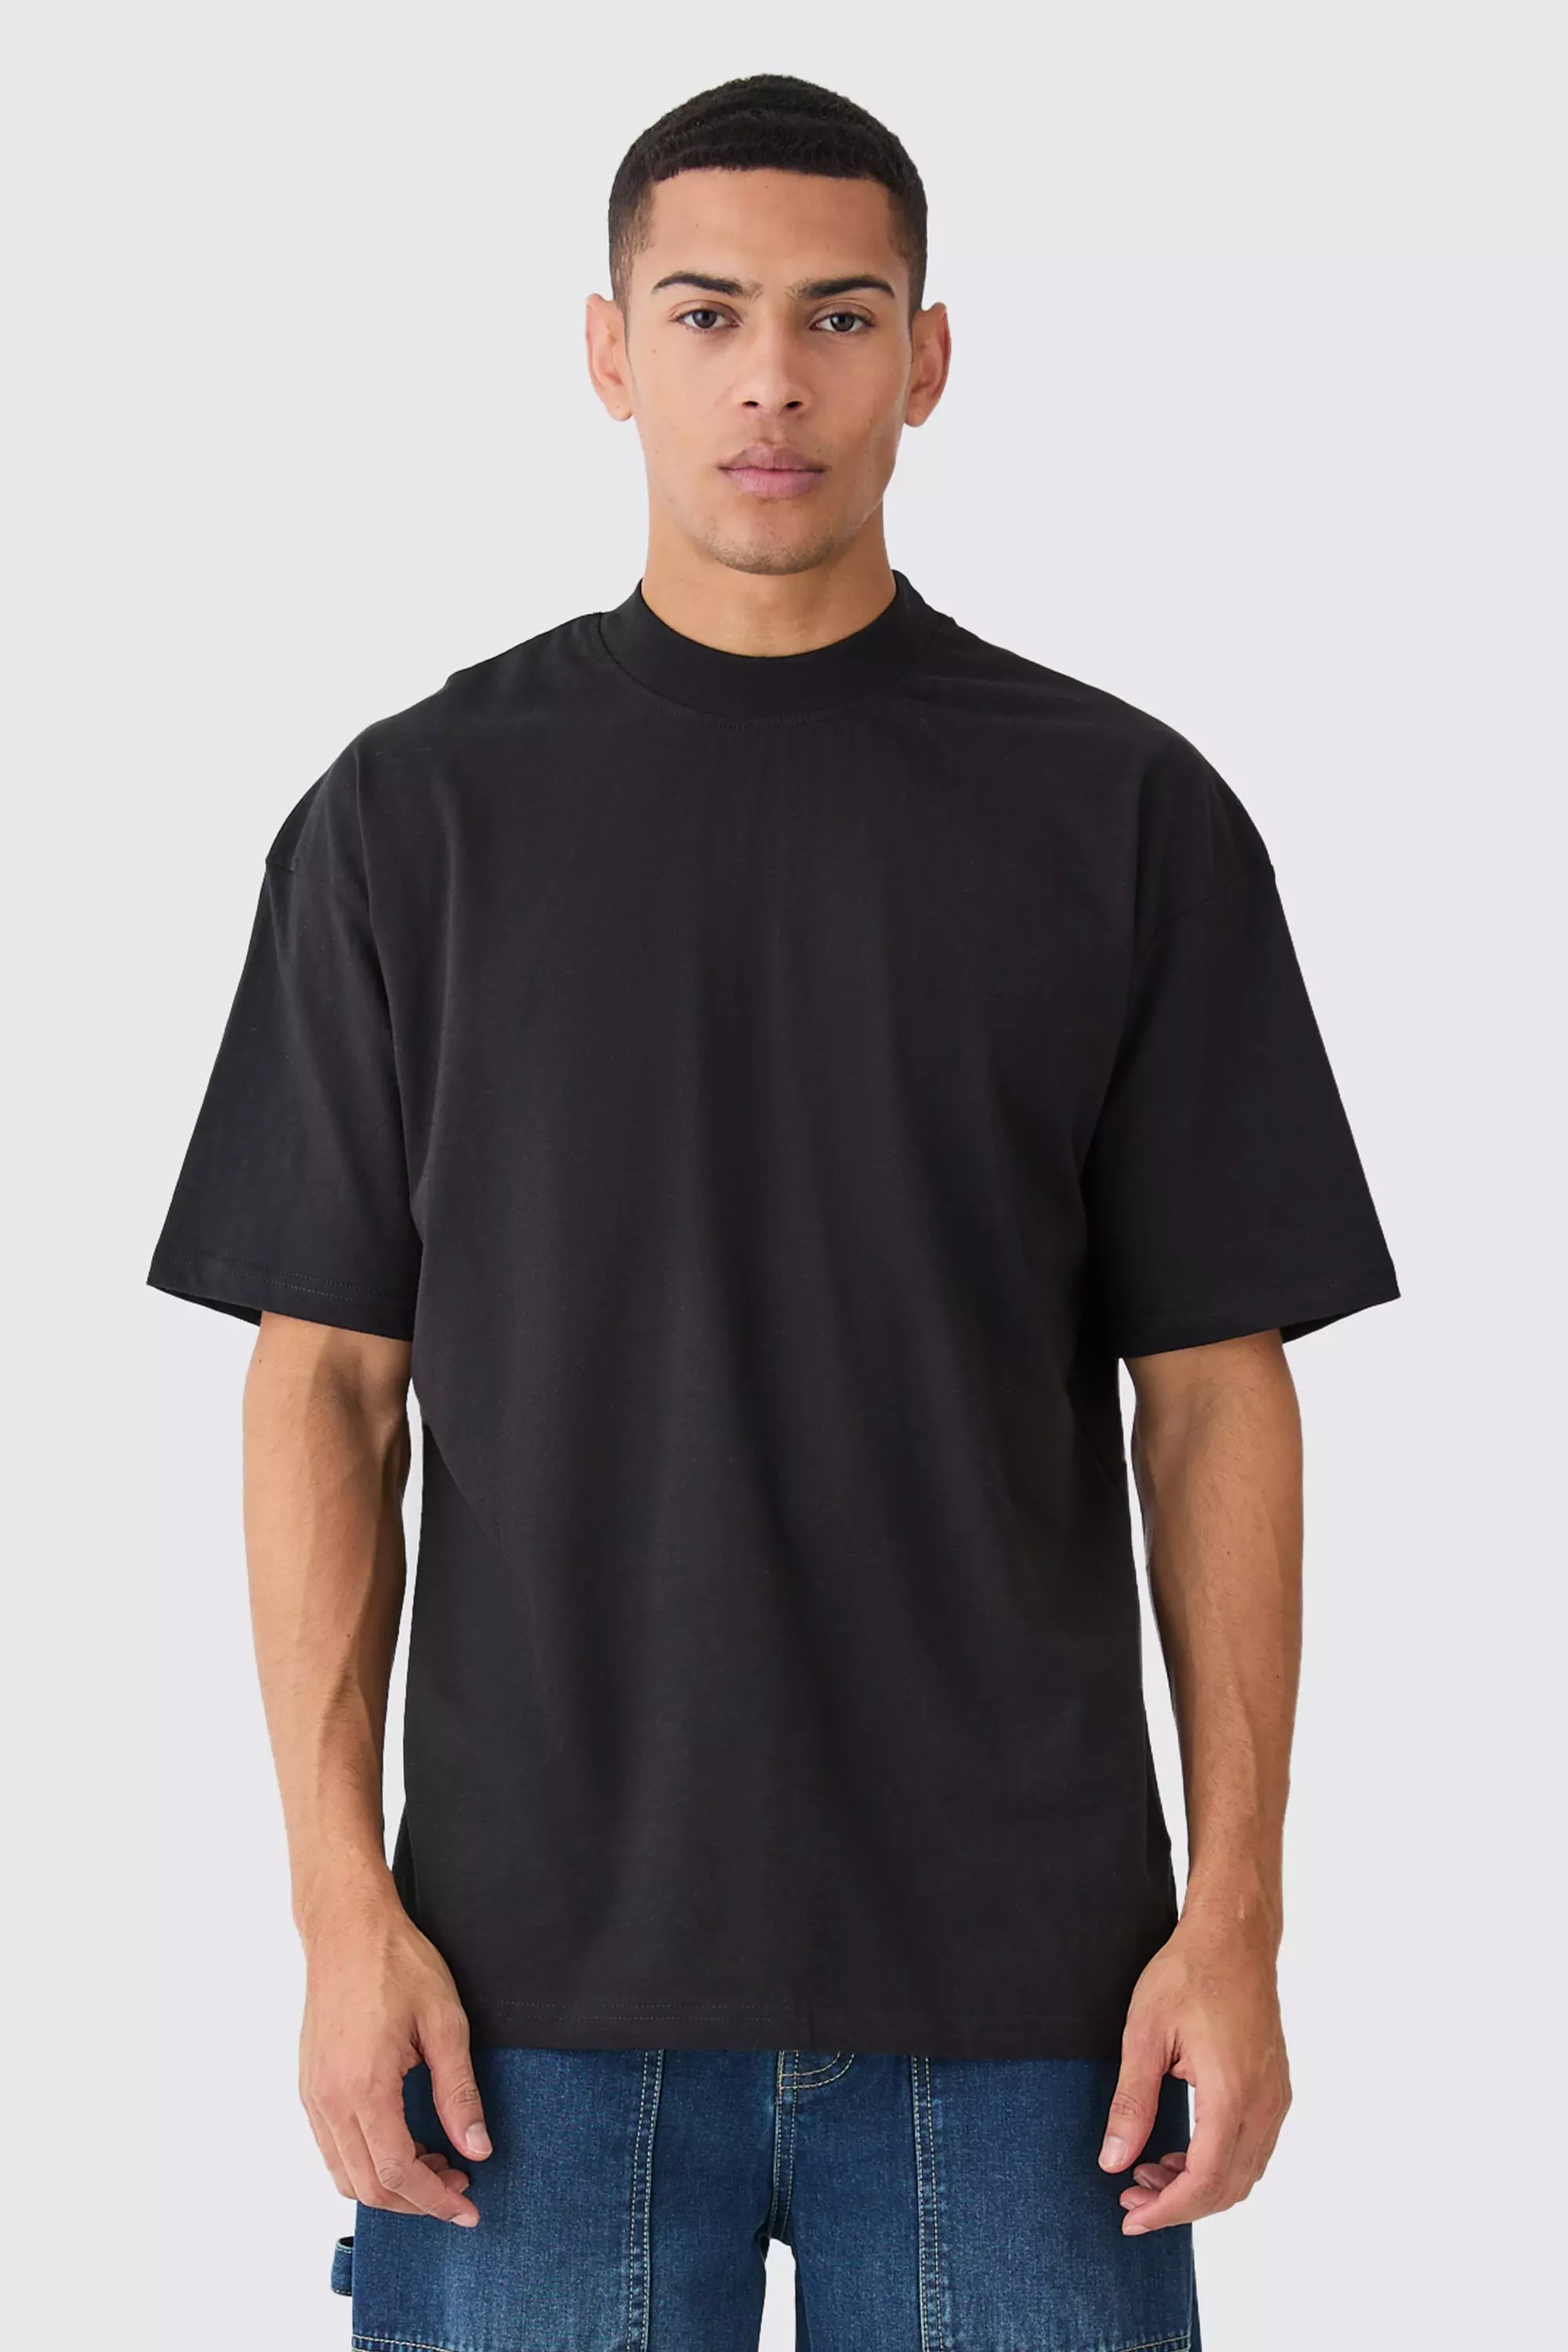 Oversized Drop Shoulder Open Stitch T-shirt